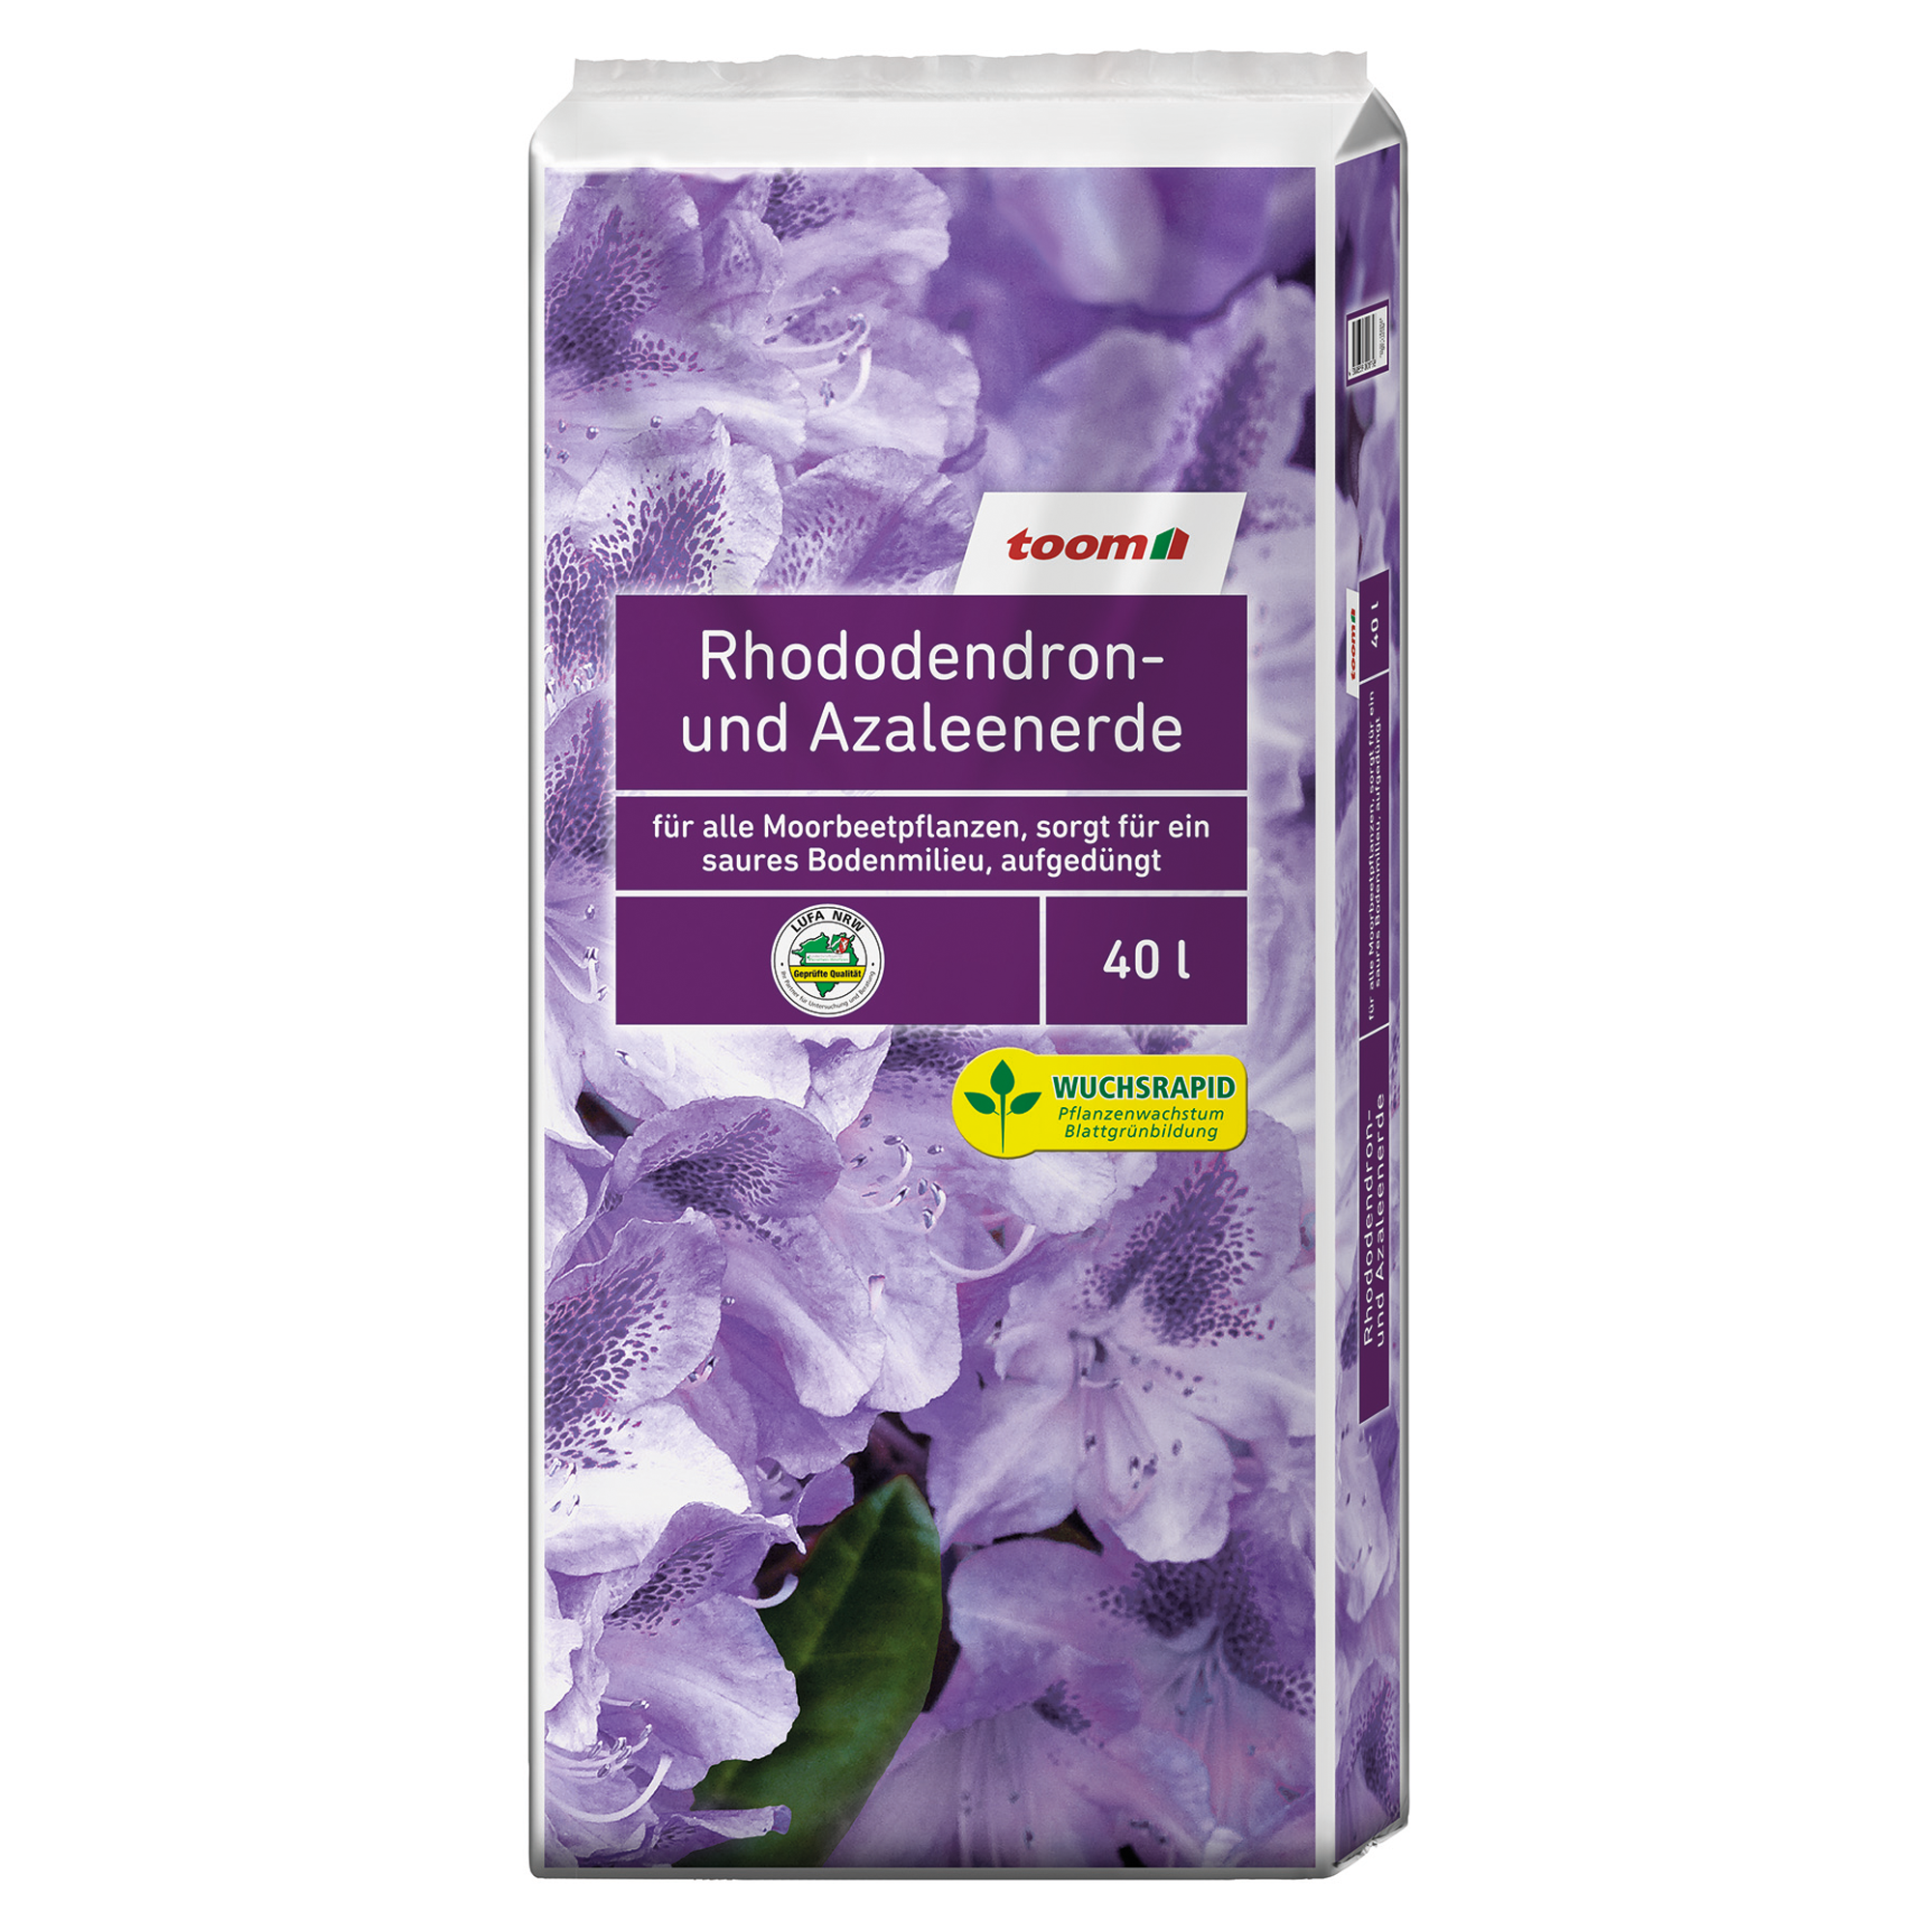 Rhododendron- und Azaleenerde 40 l + product picture